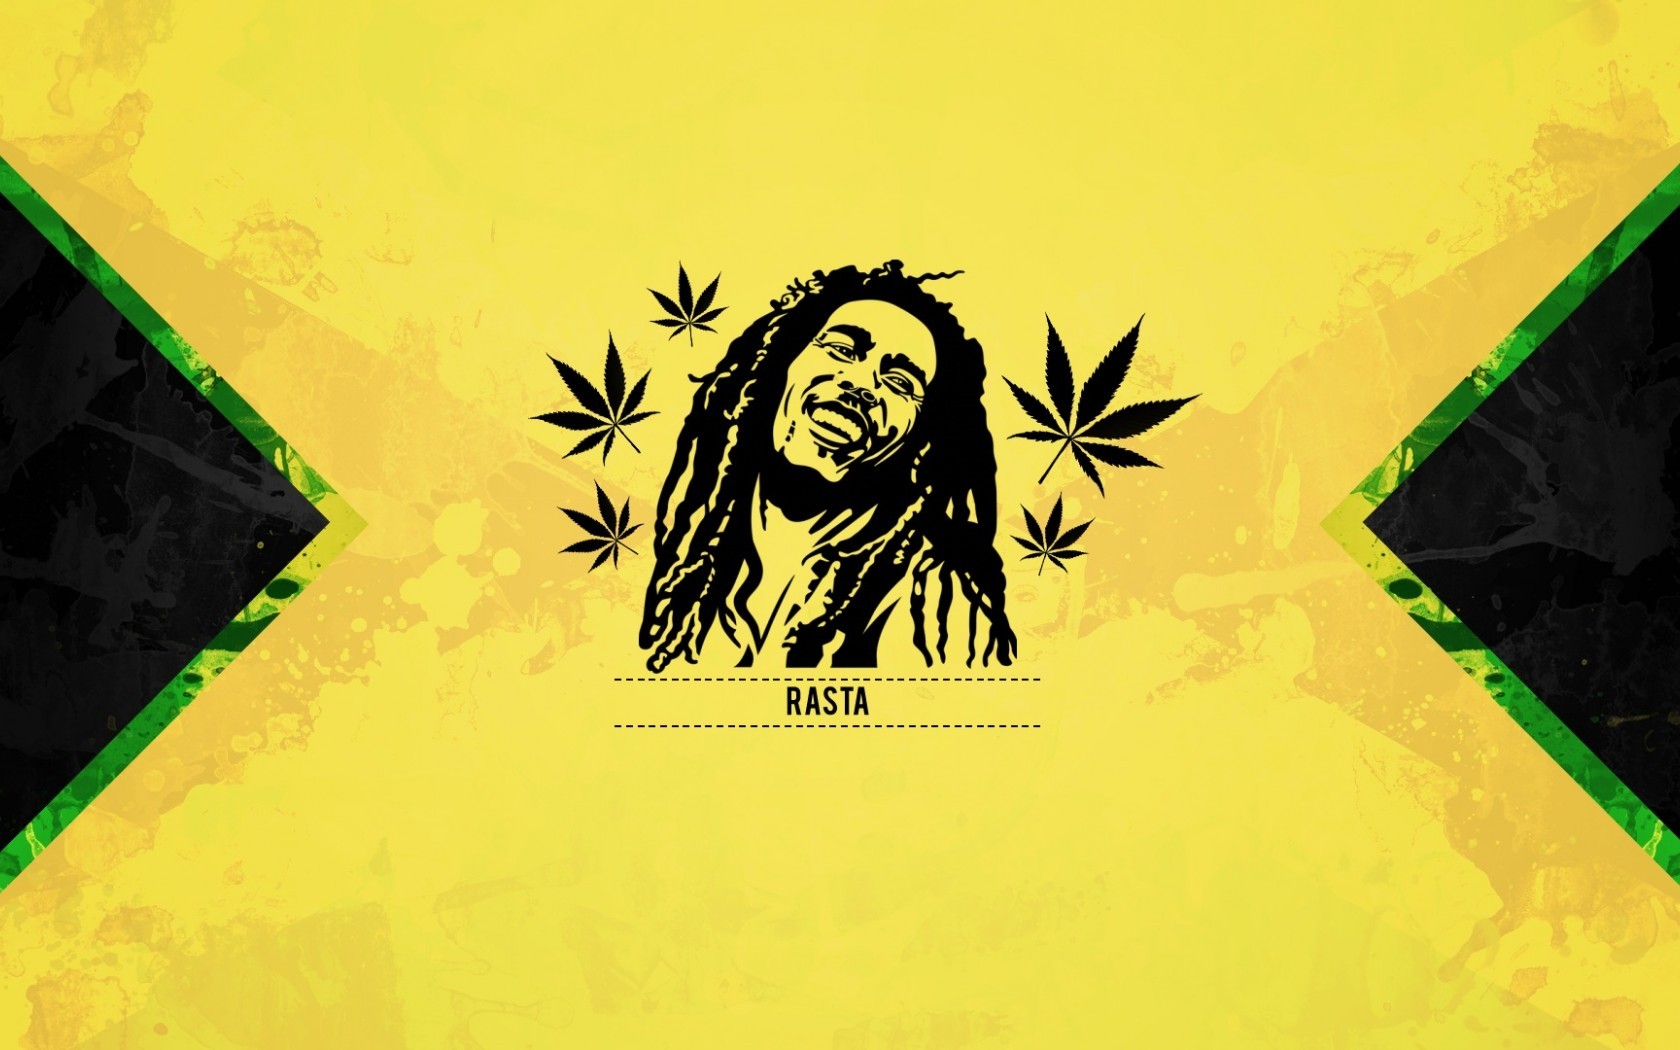 General 1680x1050 Bob Marley minimalism men music yellow background yellow smiling Rastafari singer